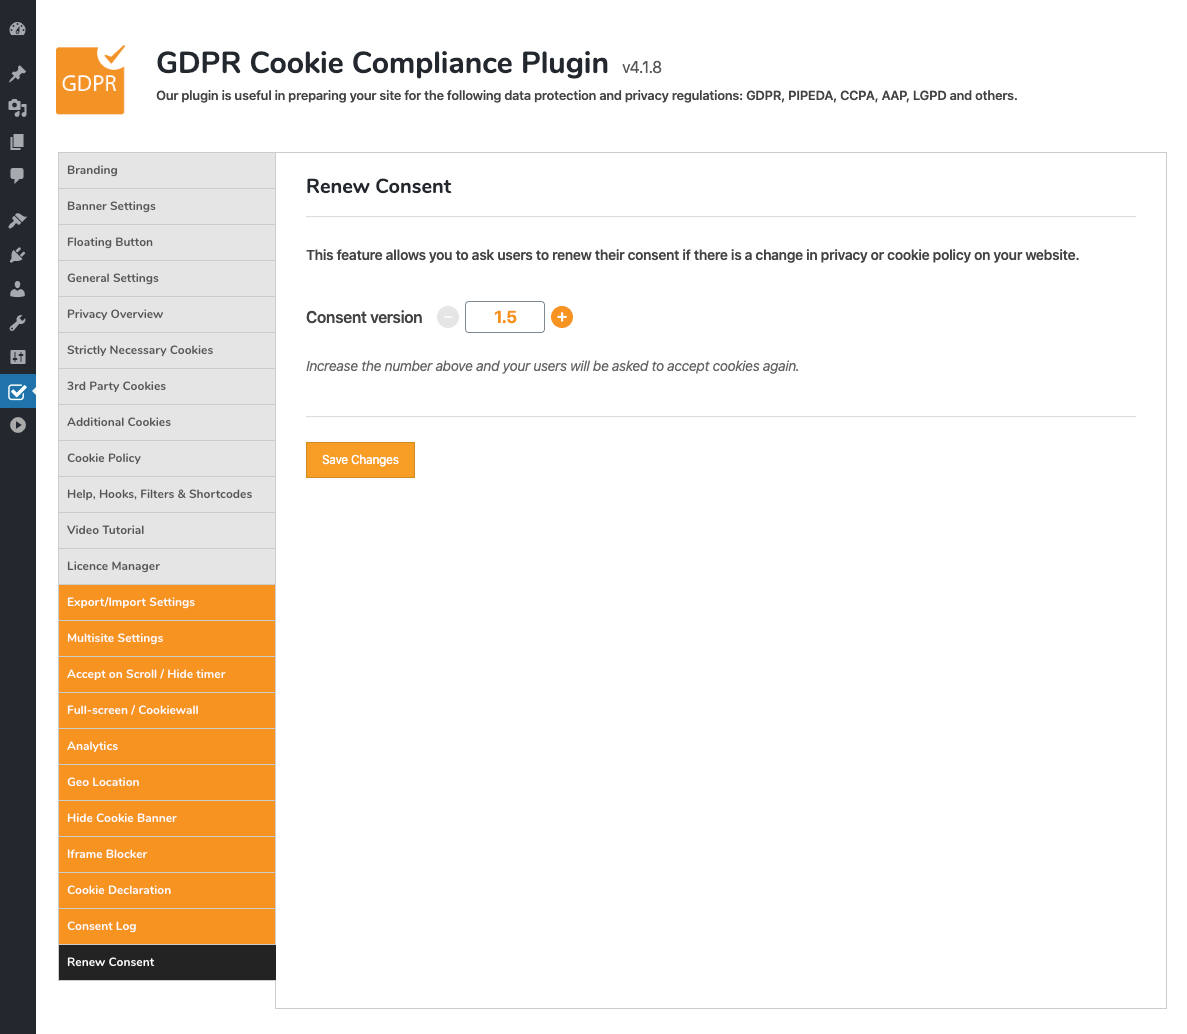 GDPR Cookie Compliance - Admin - Renew Consent [Premium]